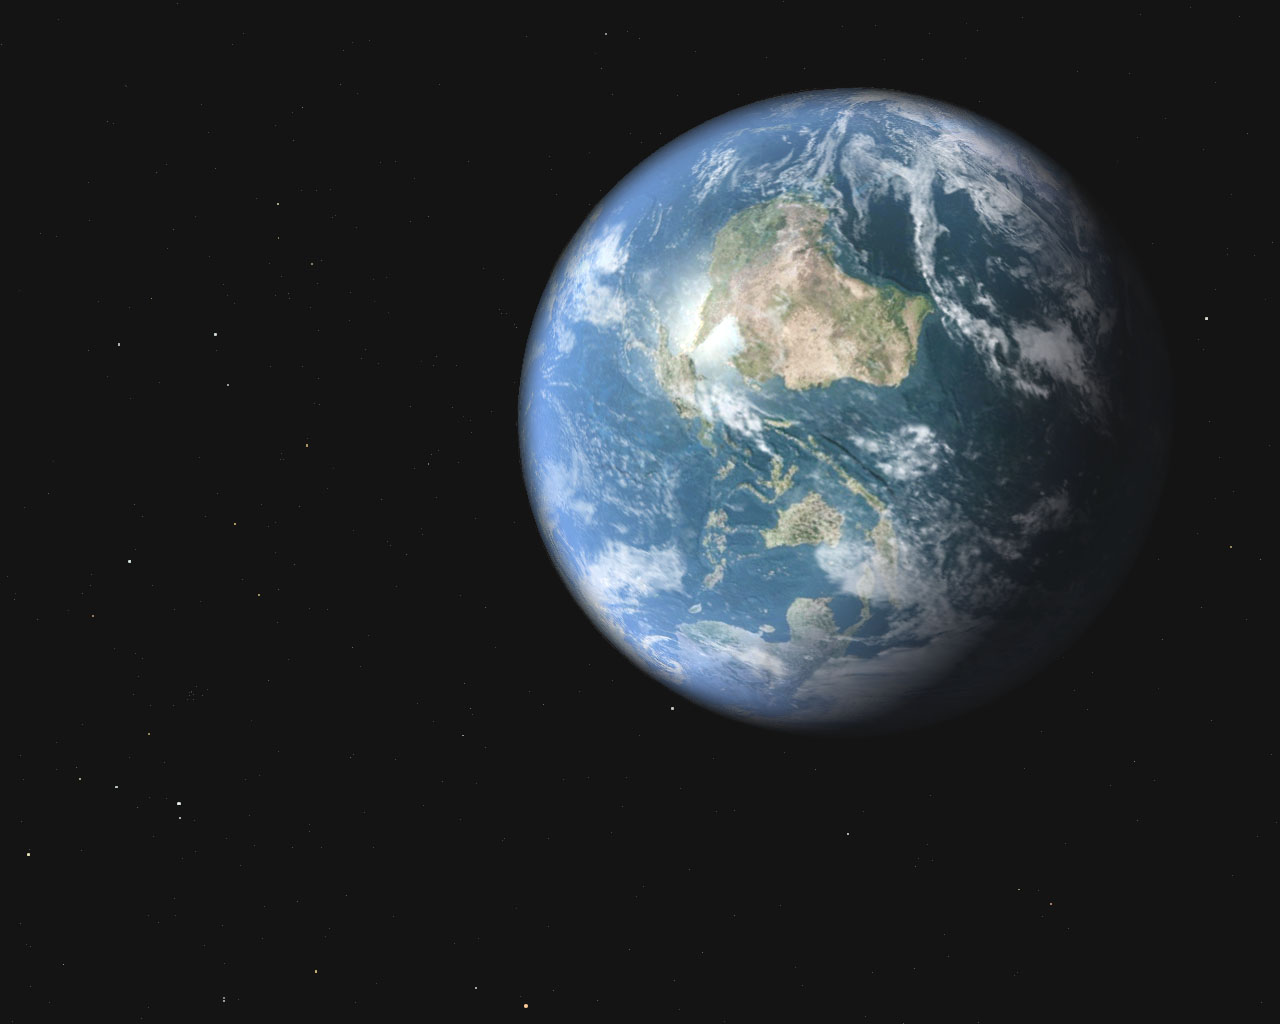 download google earth on desktop